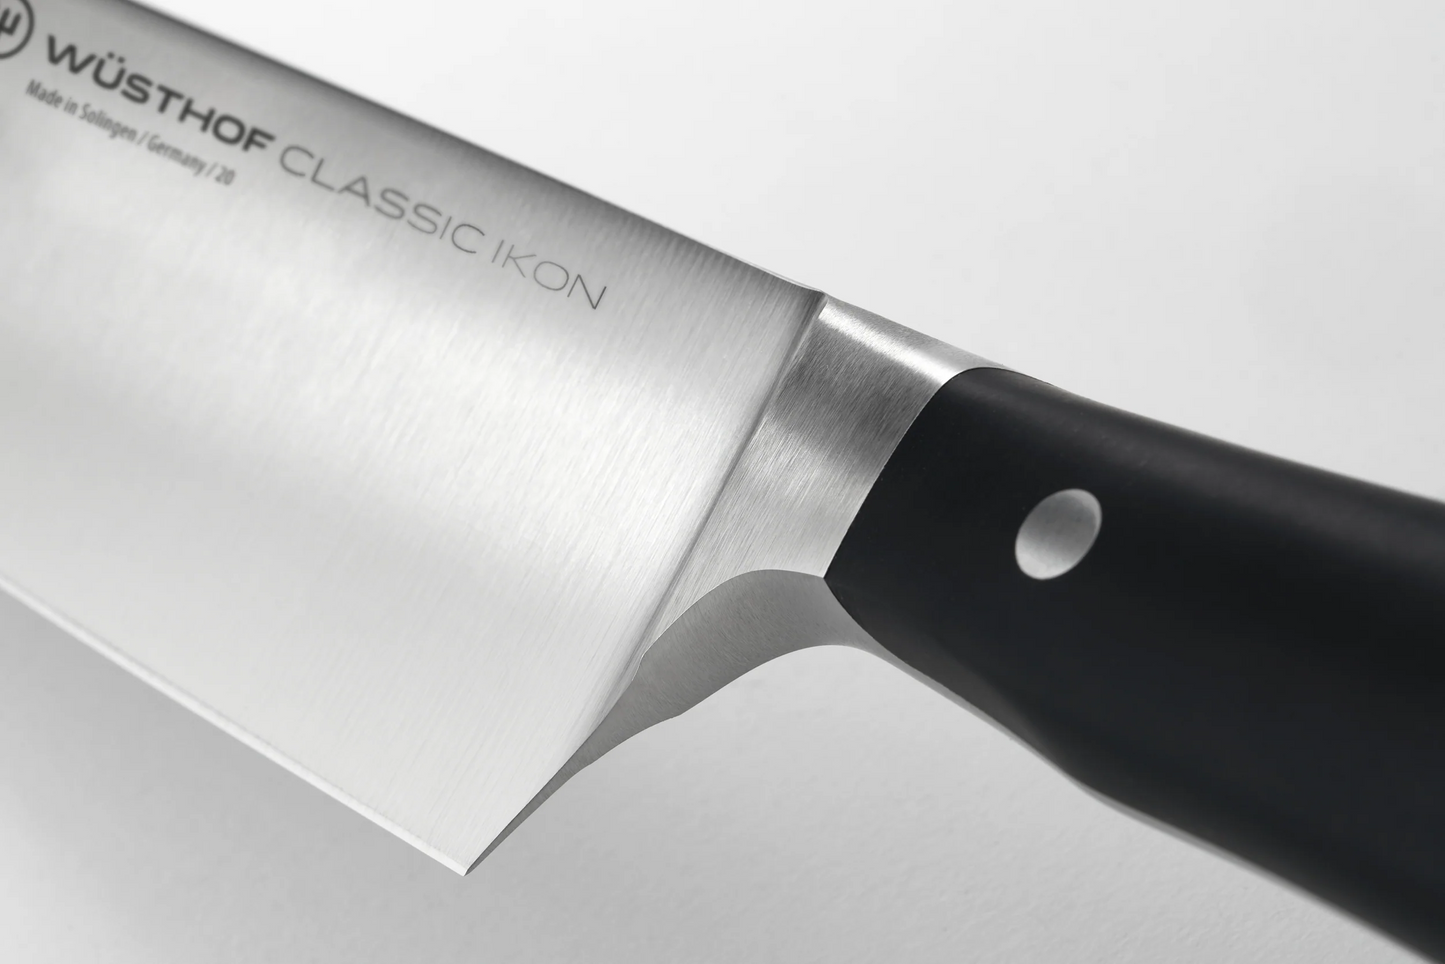 Classic Ikon - 8" Chef's Knife